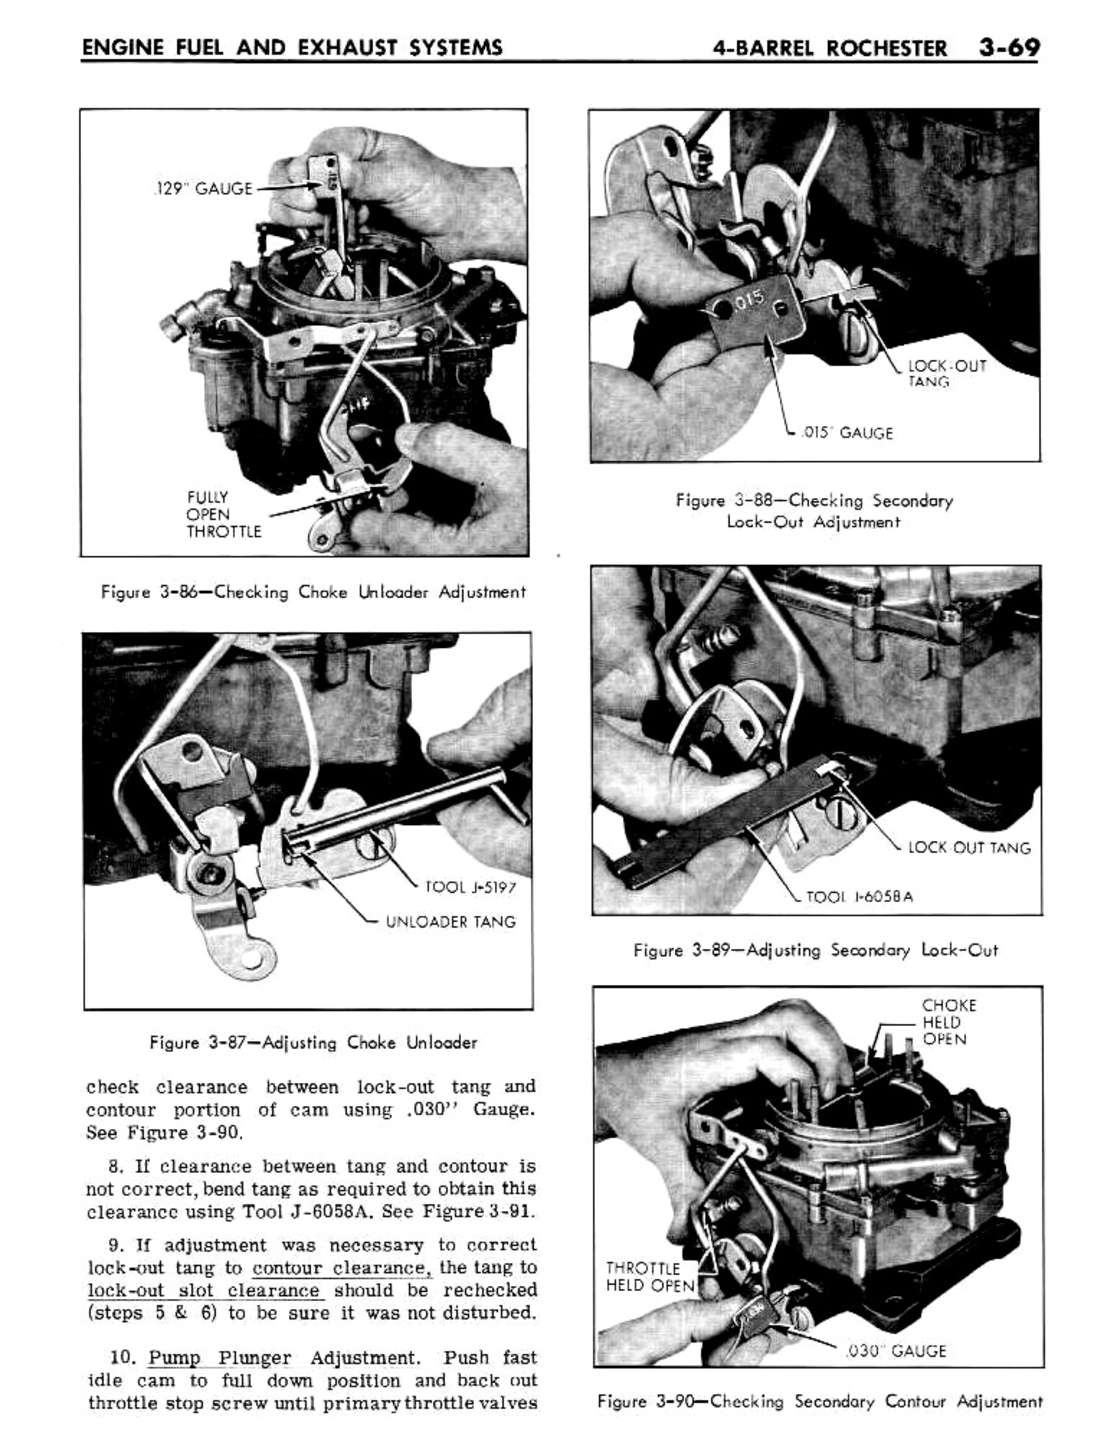 n_04 1961 Buick Shop Manual - Engine Fuel & Exhaust-069-069.jpg